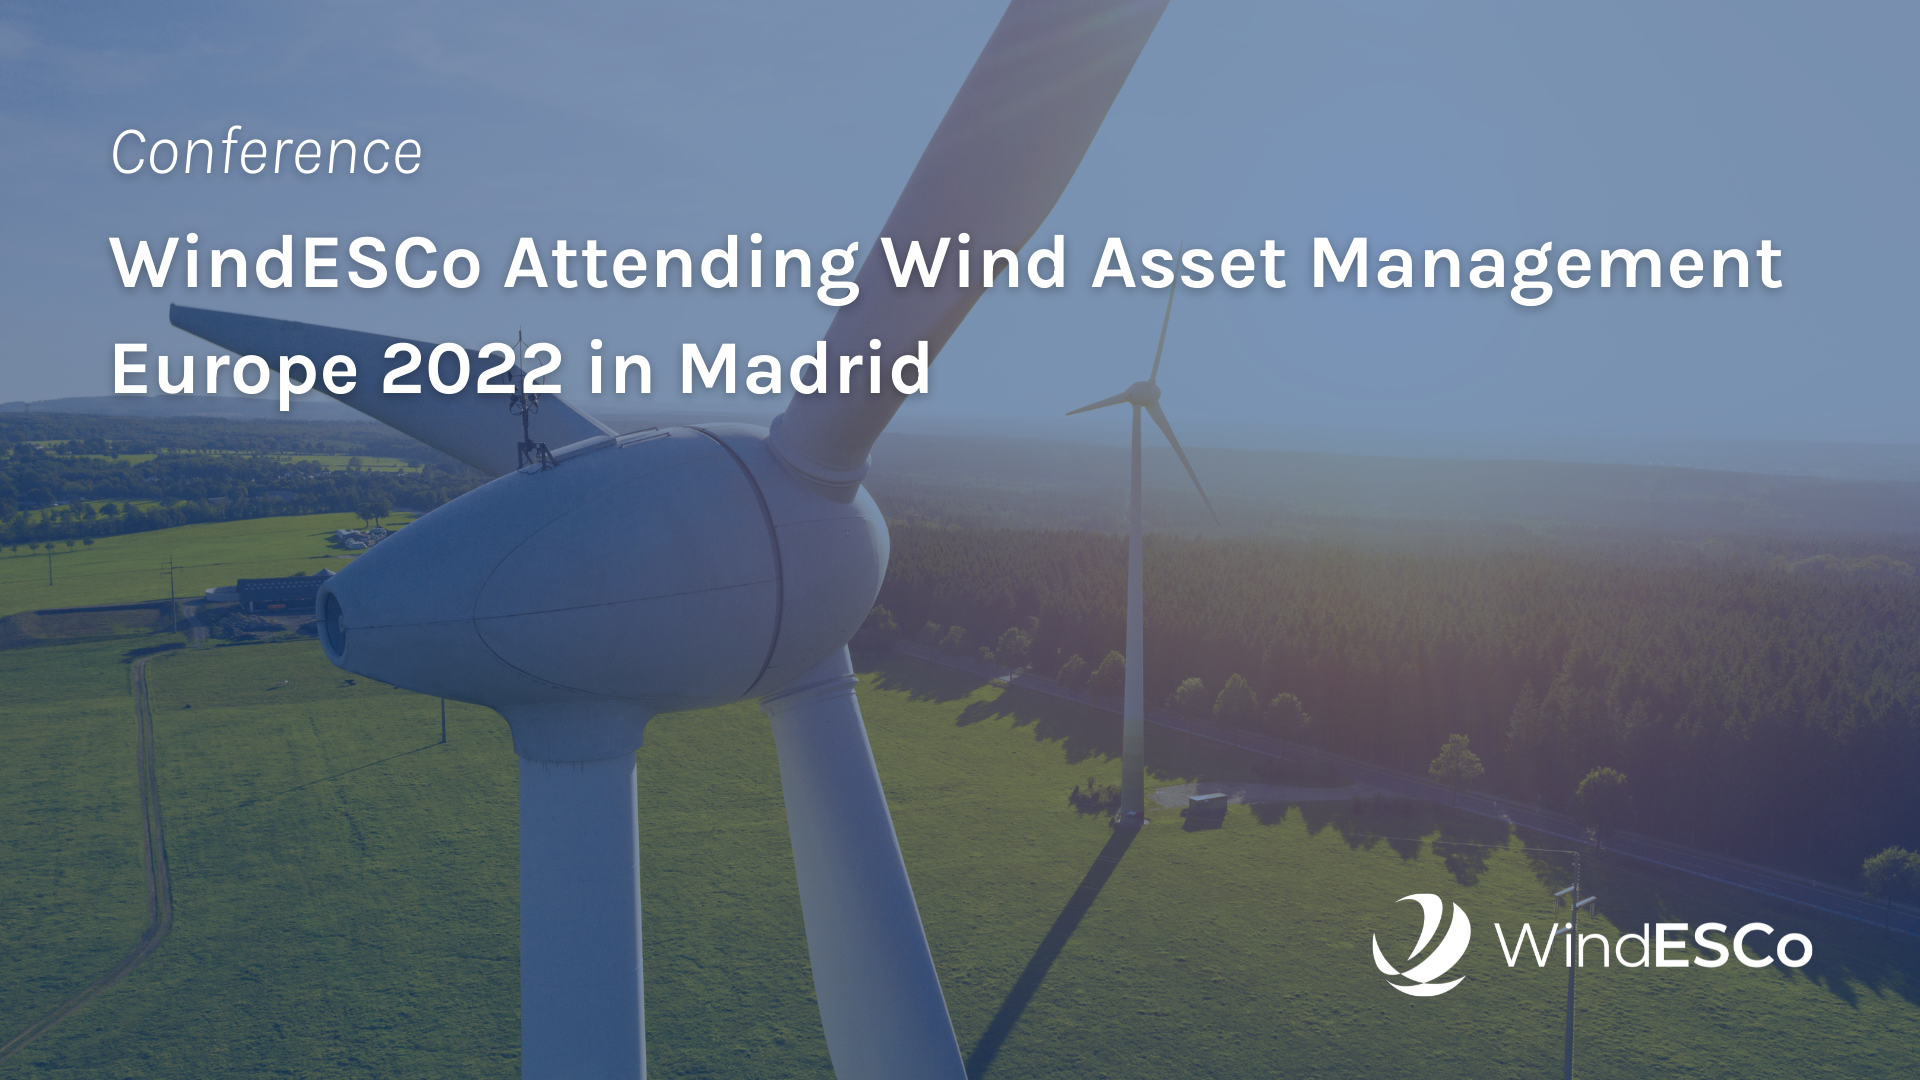 Meet WindESCo in Madrid at Wind Asset Management Europe 2022